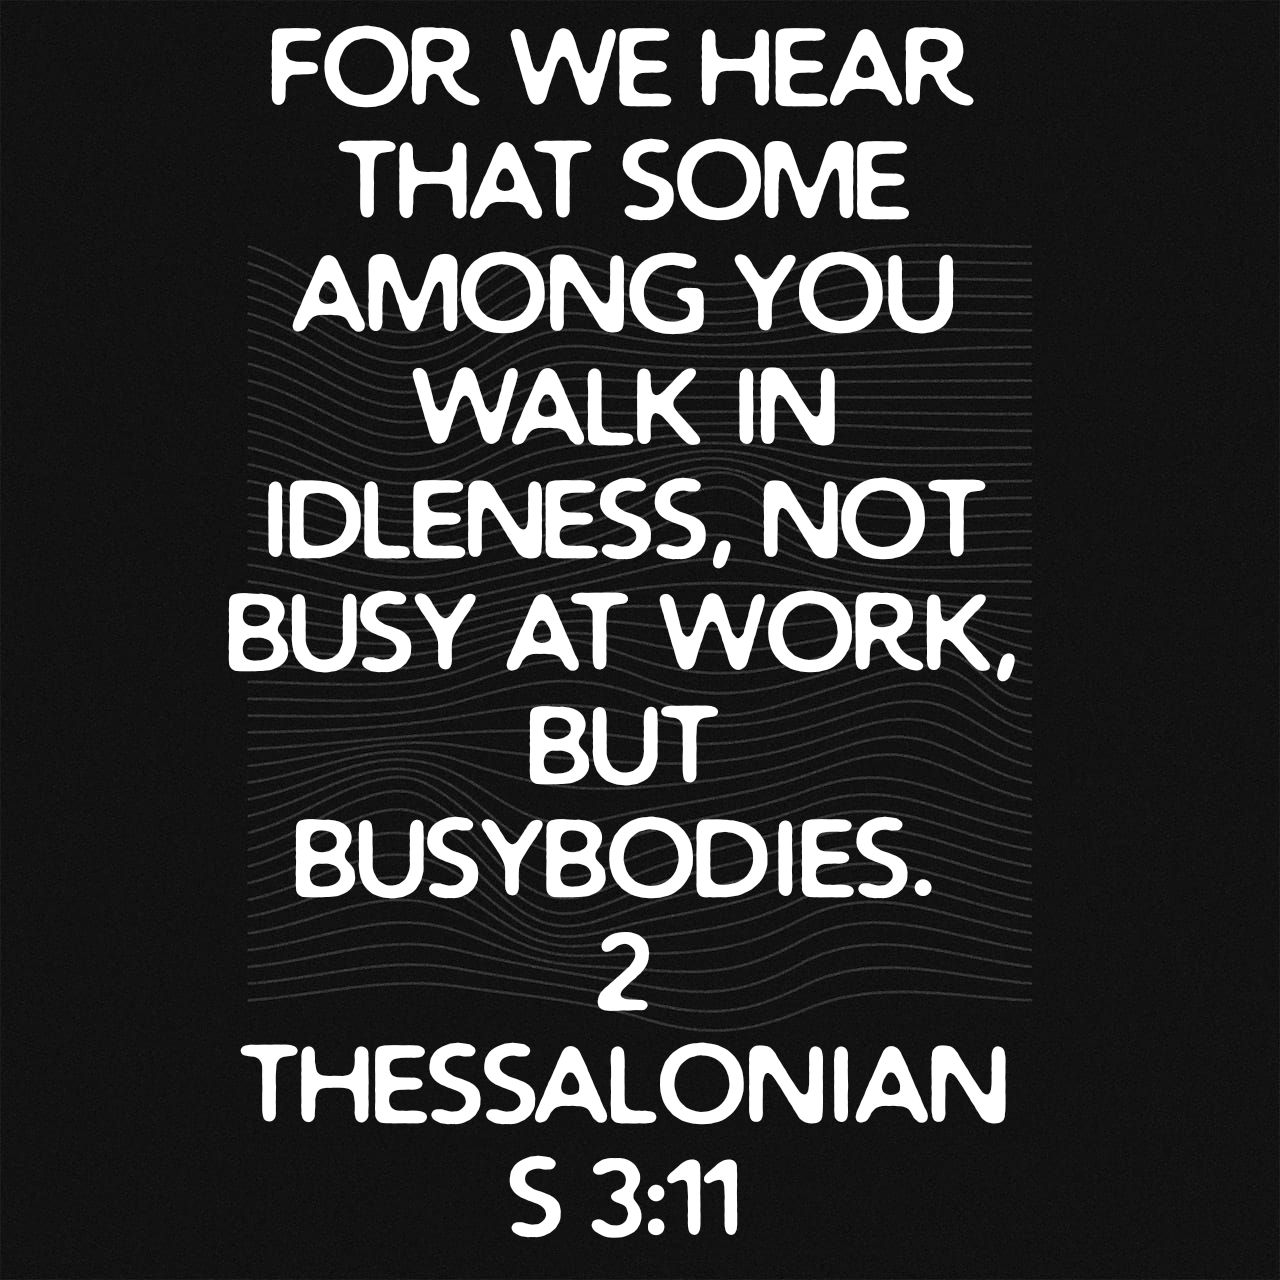 2 Thessalonians 3:11 ESV